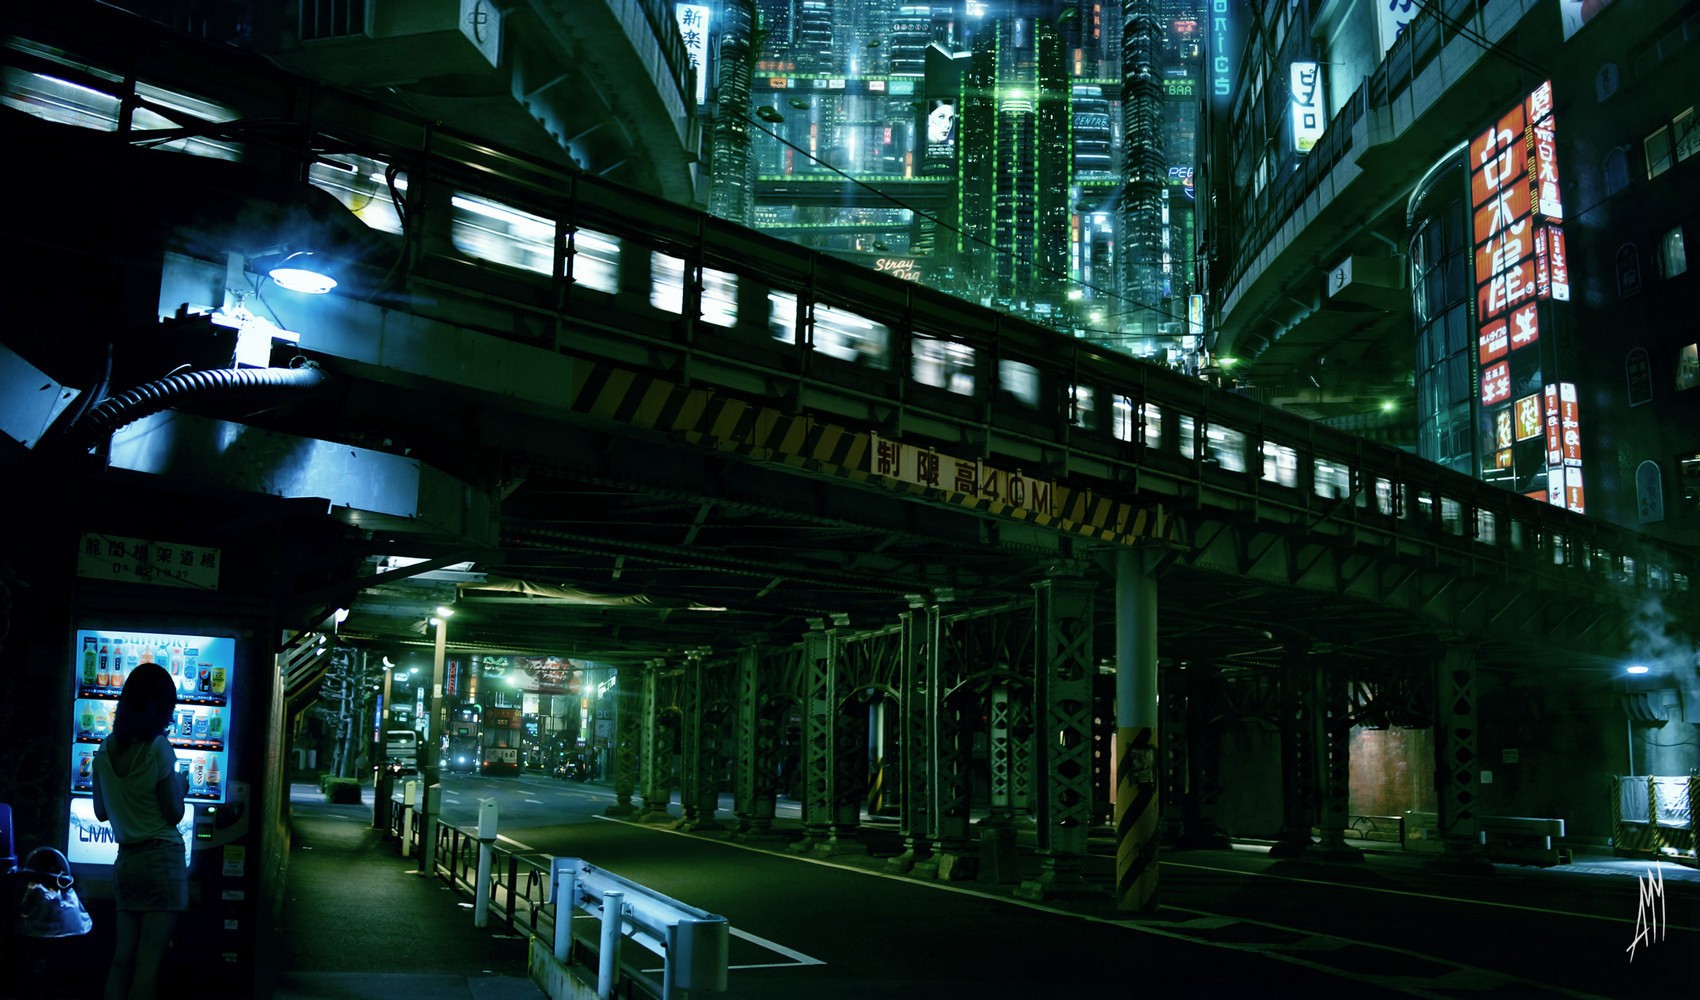 General 1700x1000 city cityscape cyberpunk futuristic Hong Kong China traffic urban night lights street science fiction artwork Asia